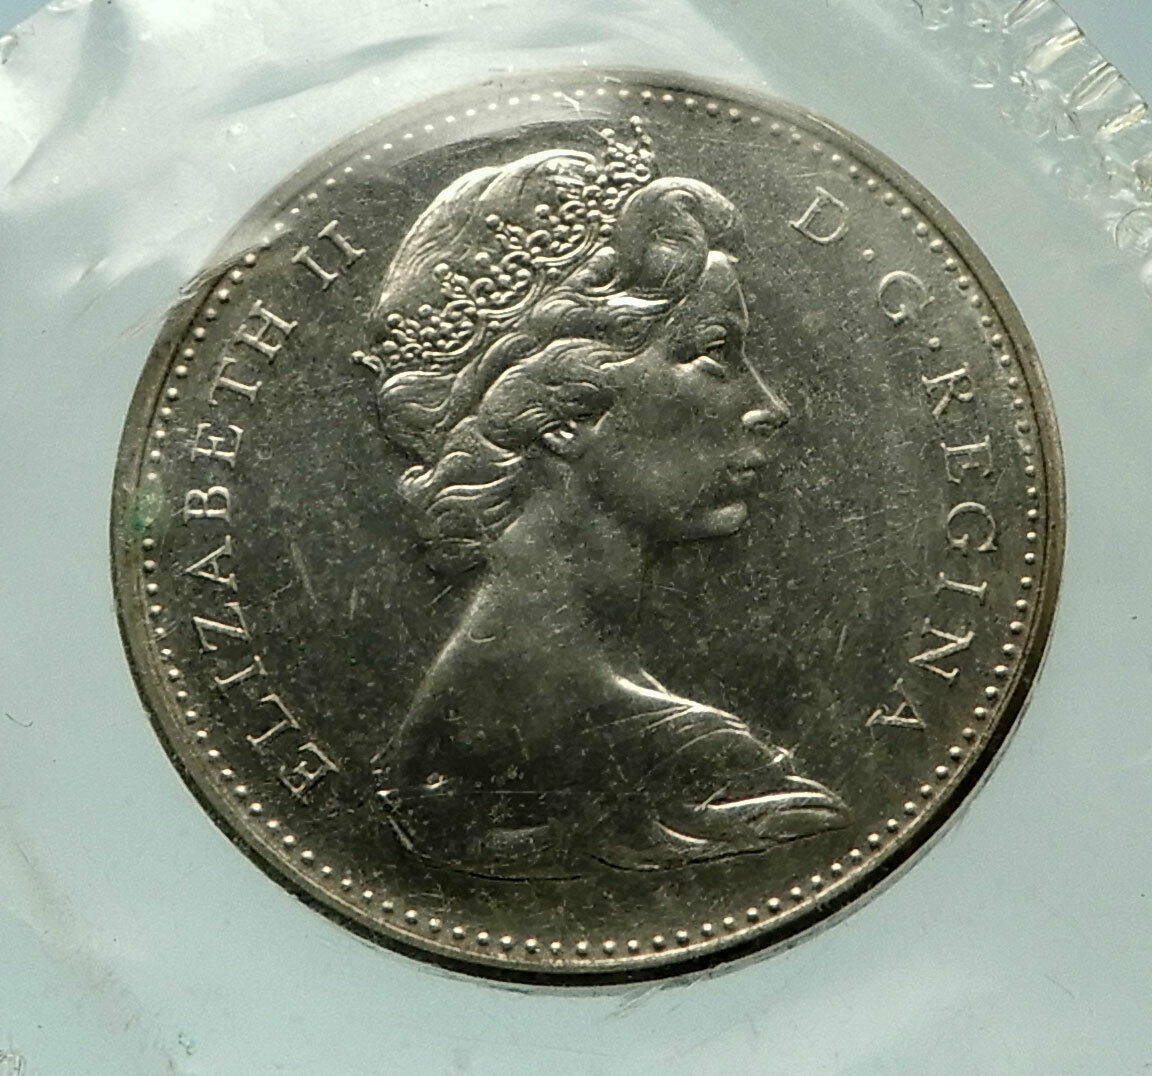 1965 CANADA United Kingdom Queen Elizabeth II BEAVER 5C Coin i76501